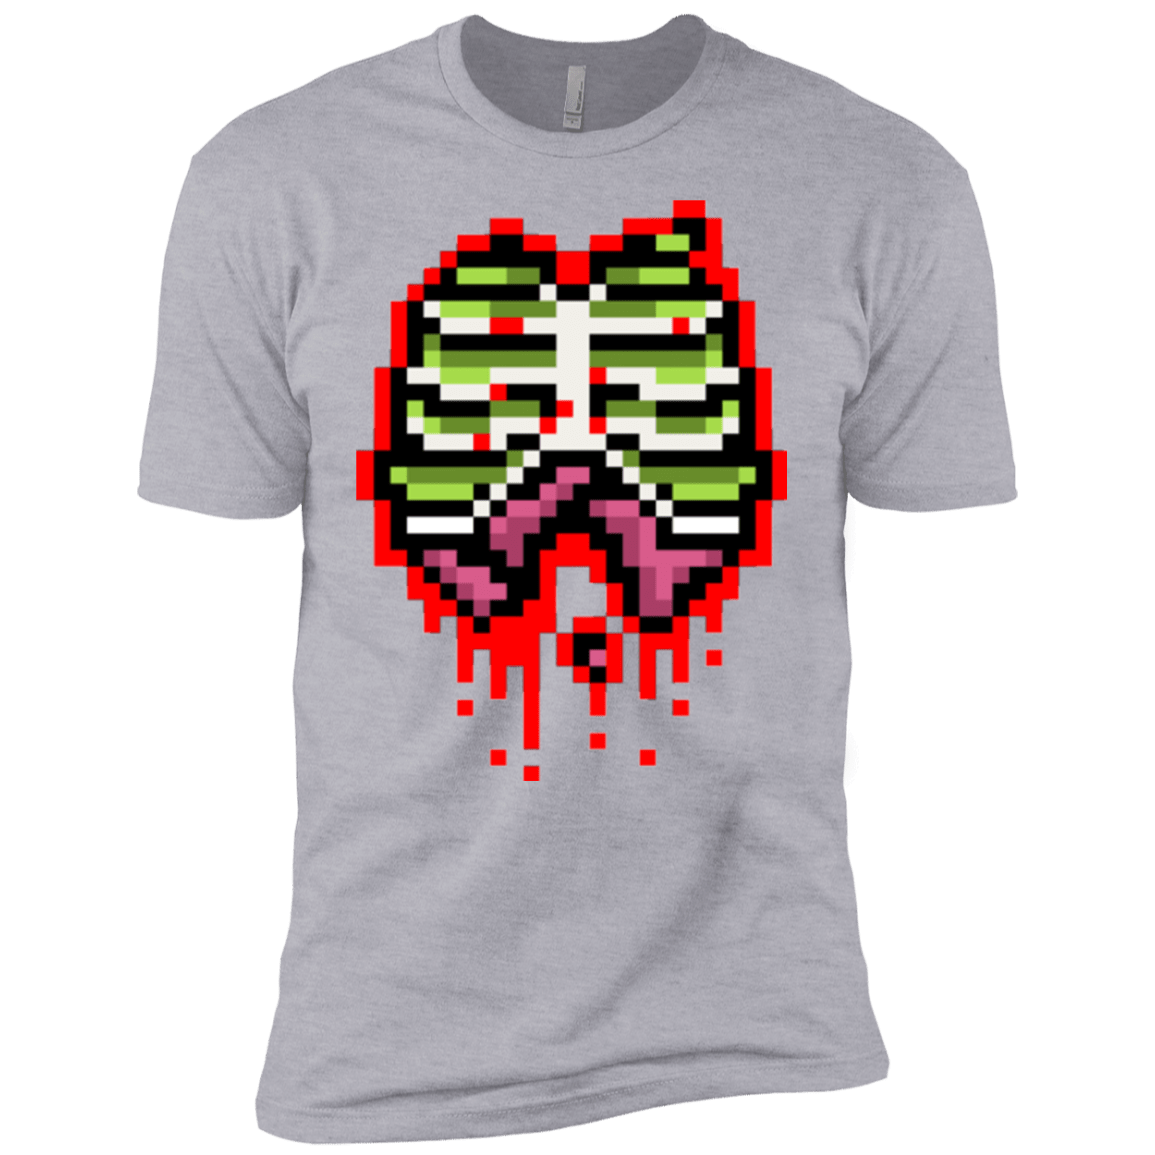 T-Shirts Heather Grey / YXS Zombie Guts Boys Premium T-Shirt